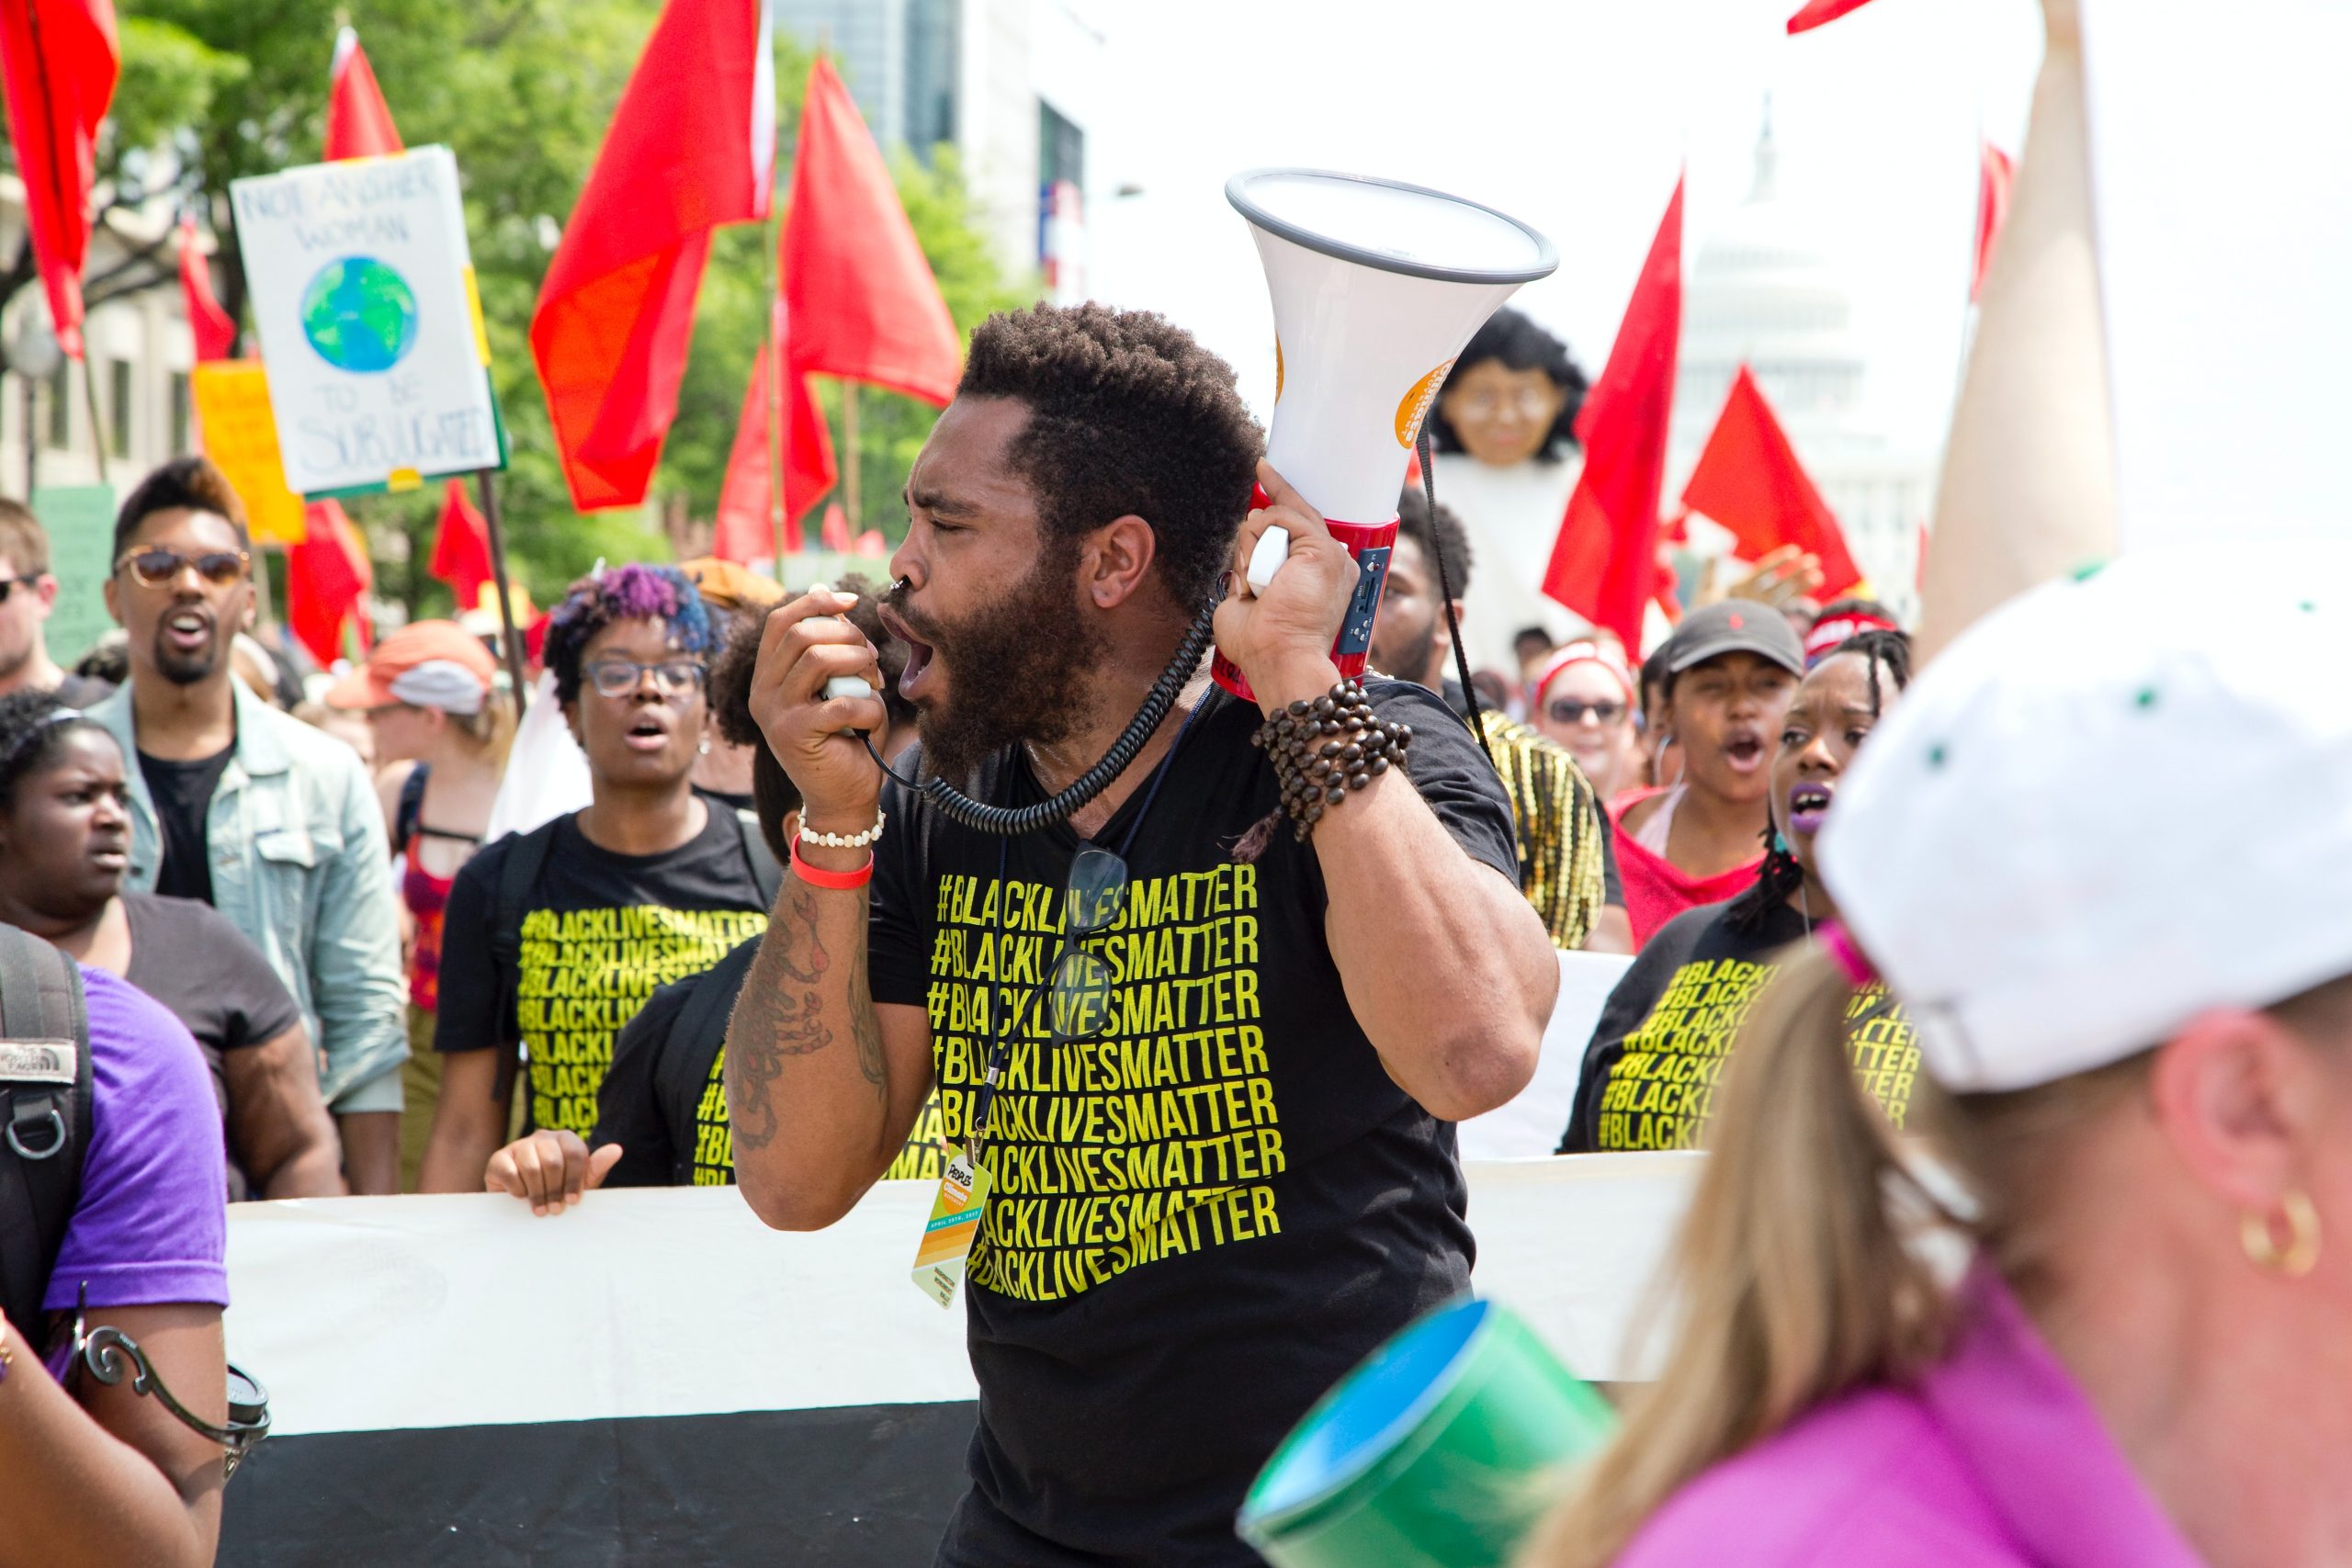 A Black man wearing a Black Lives Matter T-shirt speaks into a megaphone to a crowd.